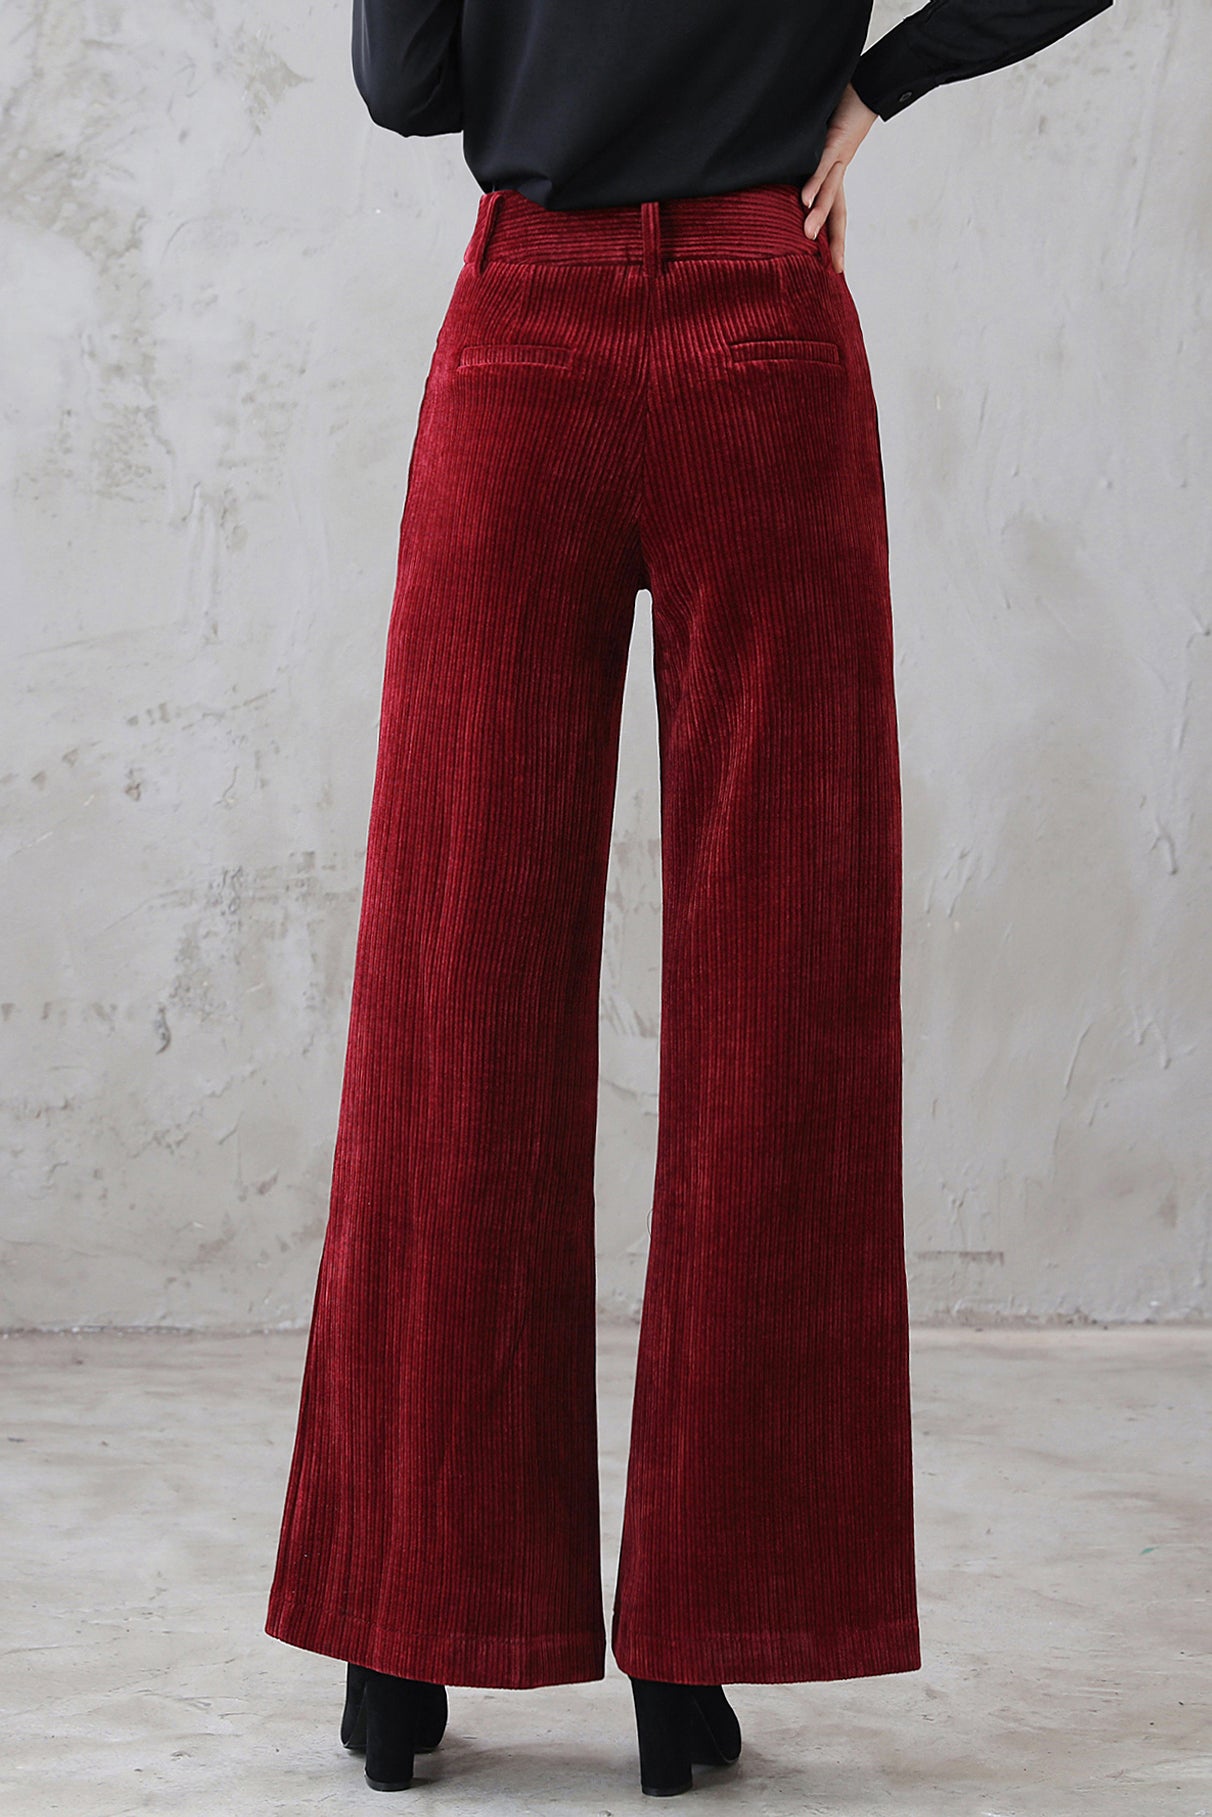 Red Corduroy Pants, Wide Leg pants for women 311501